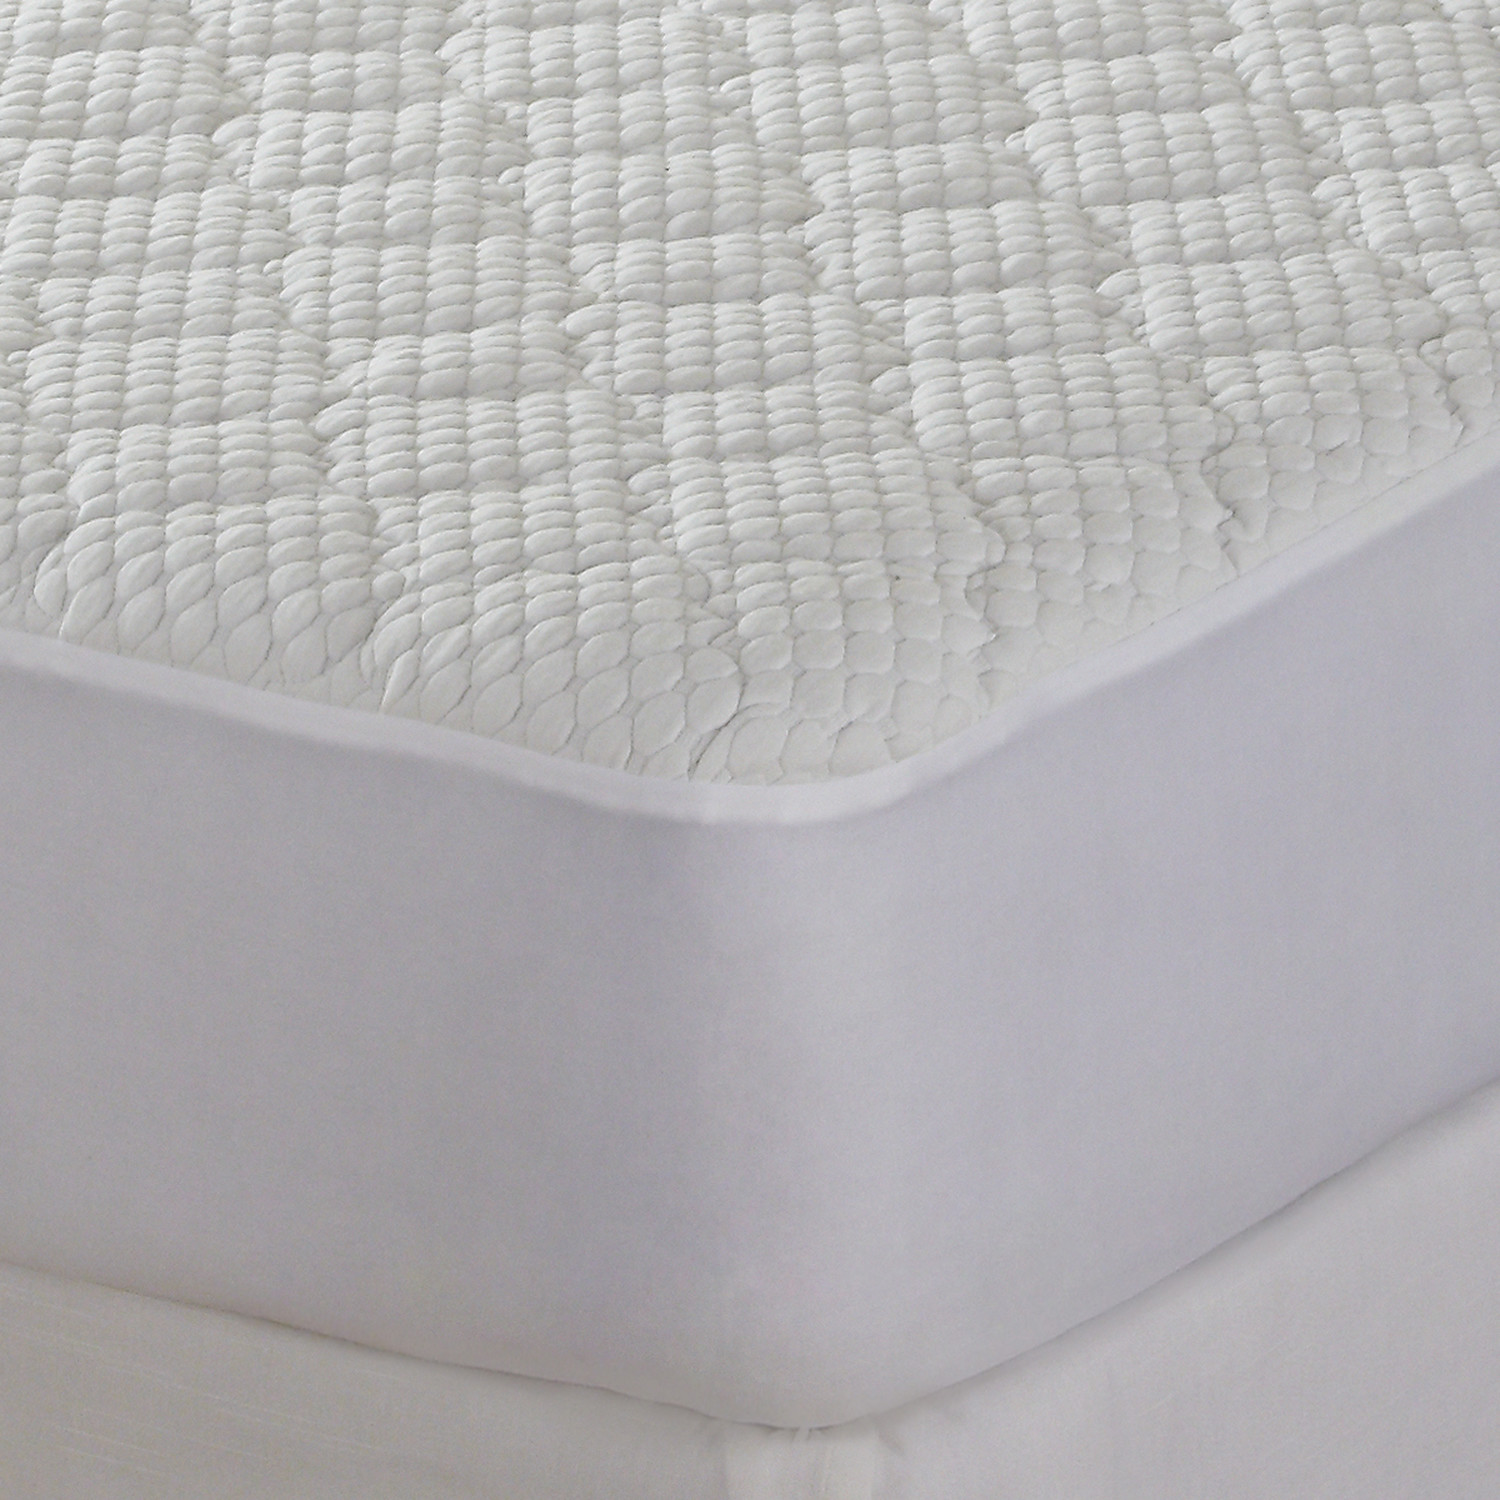 Comfort Cushion Memory Foam Mattress Pad (Twin) - Rio Home Fashions ...